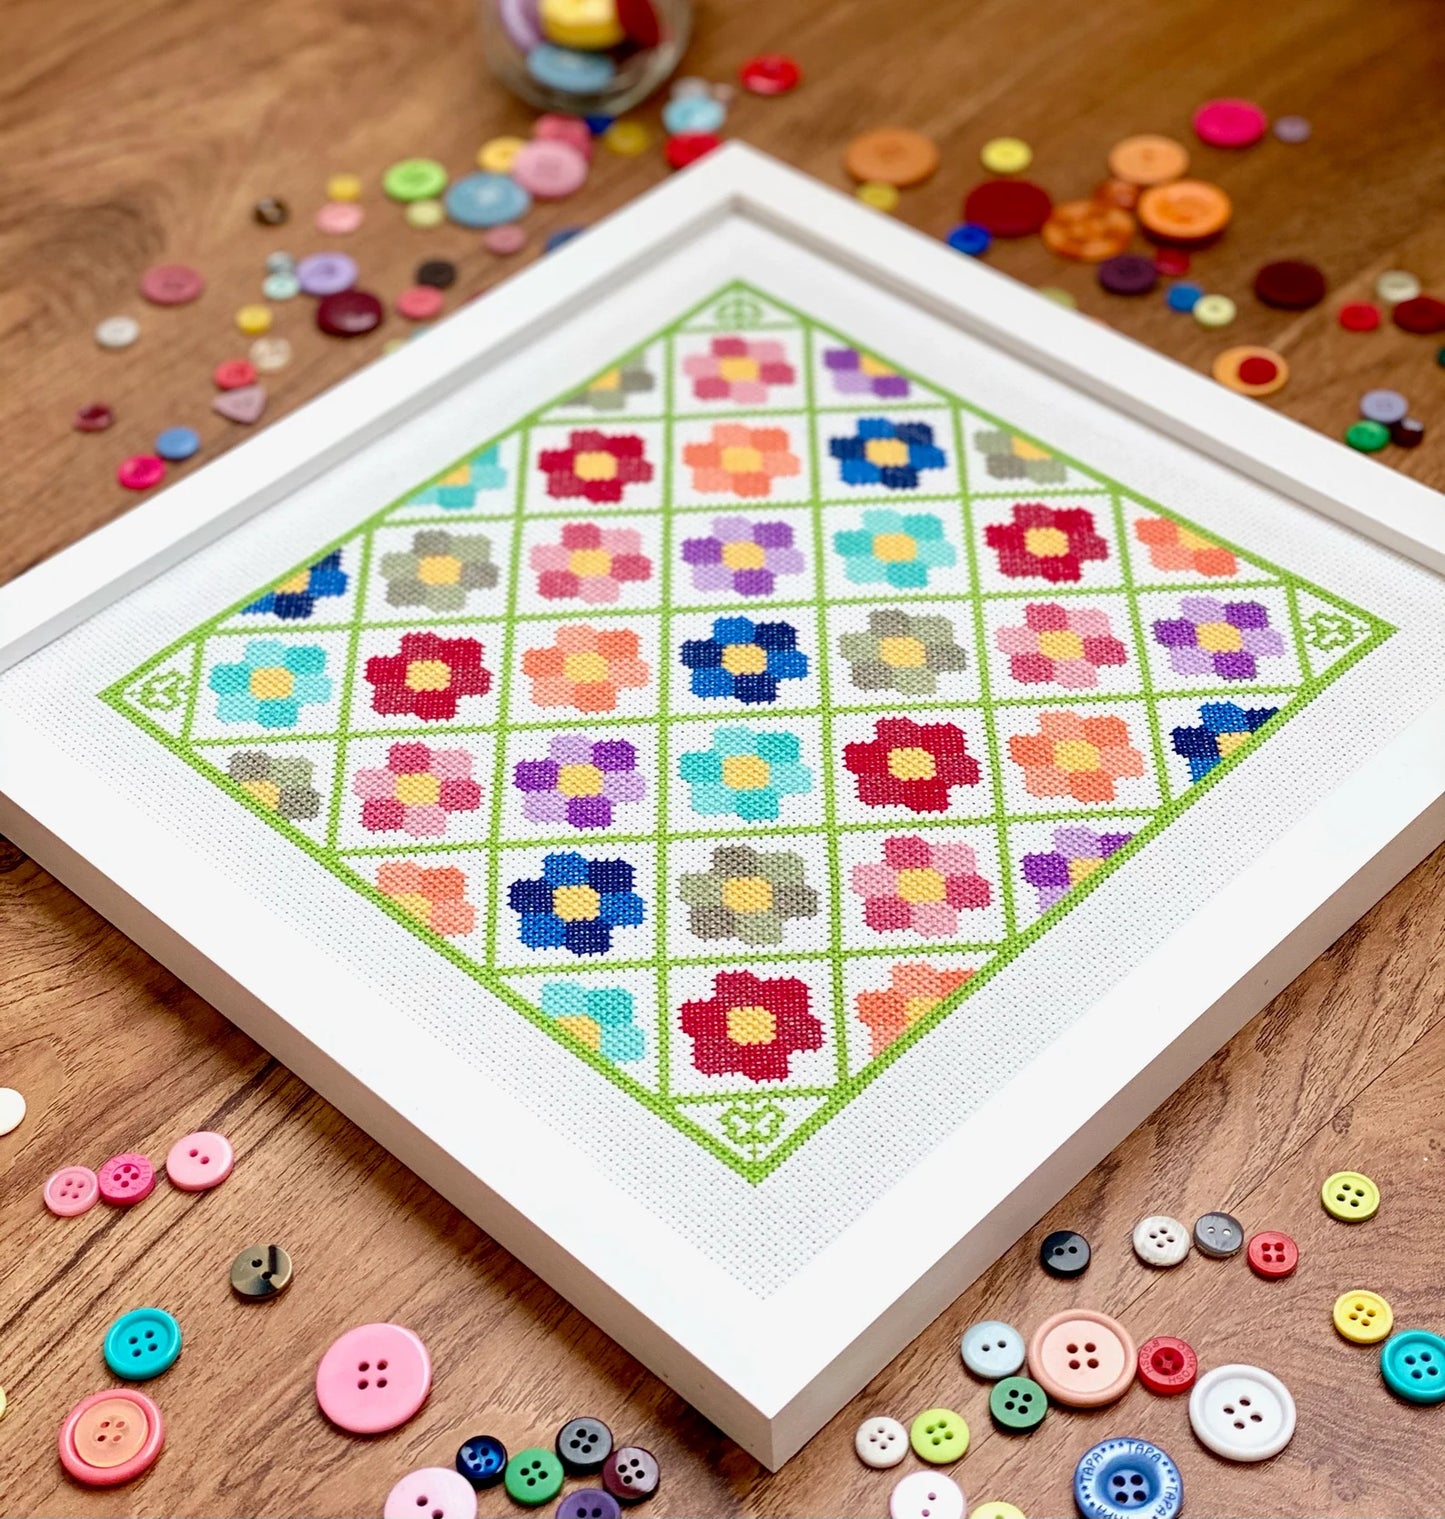 Grandmas Garden Cross Stitch Pattern by Count Your Stitches Designs